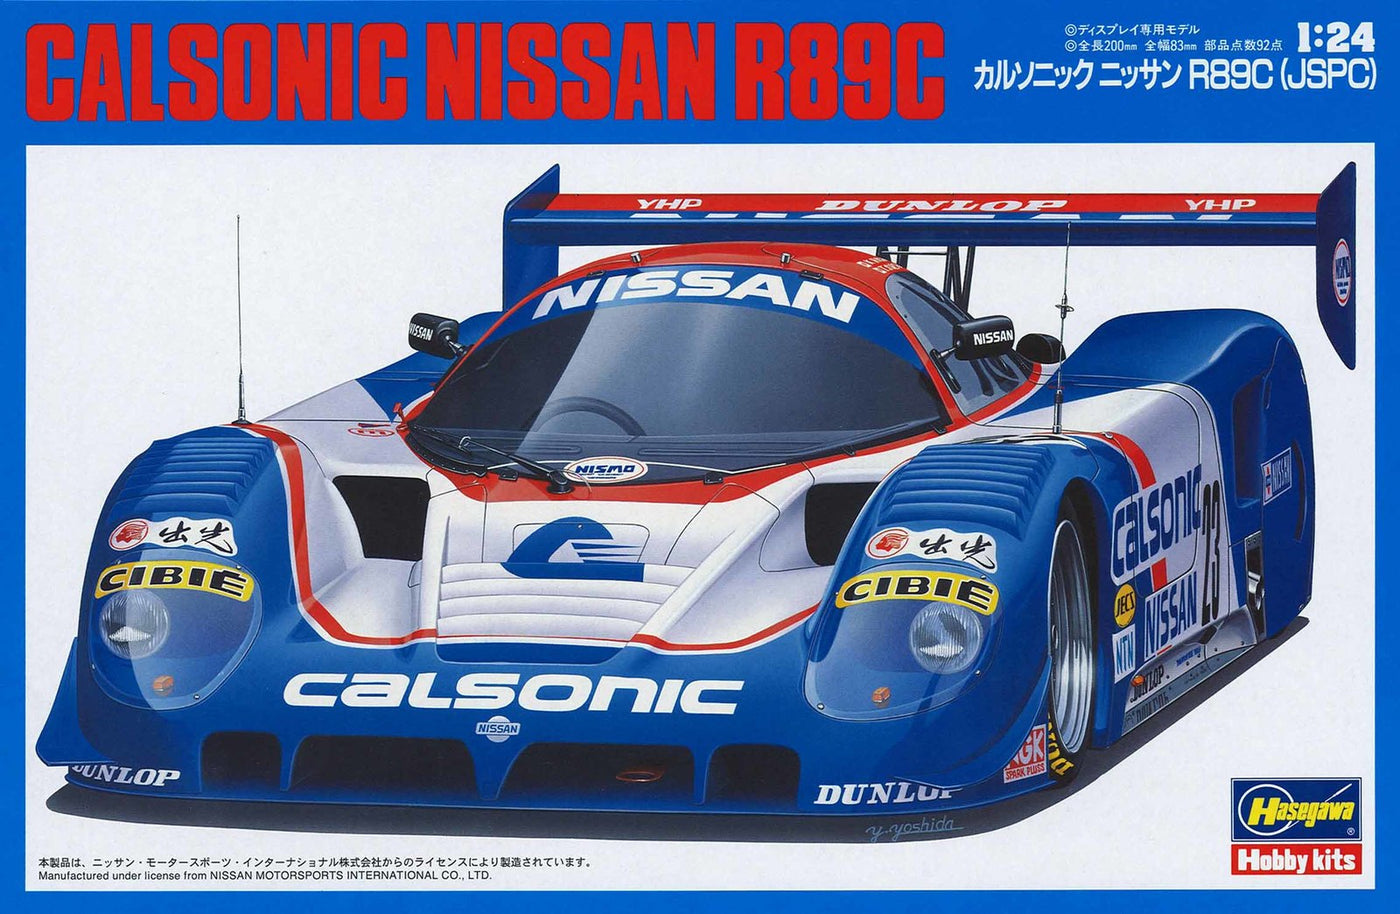 Hasegawa - 1/24 Calsonic Nissan
R89C